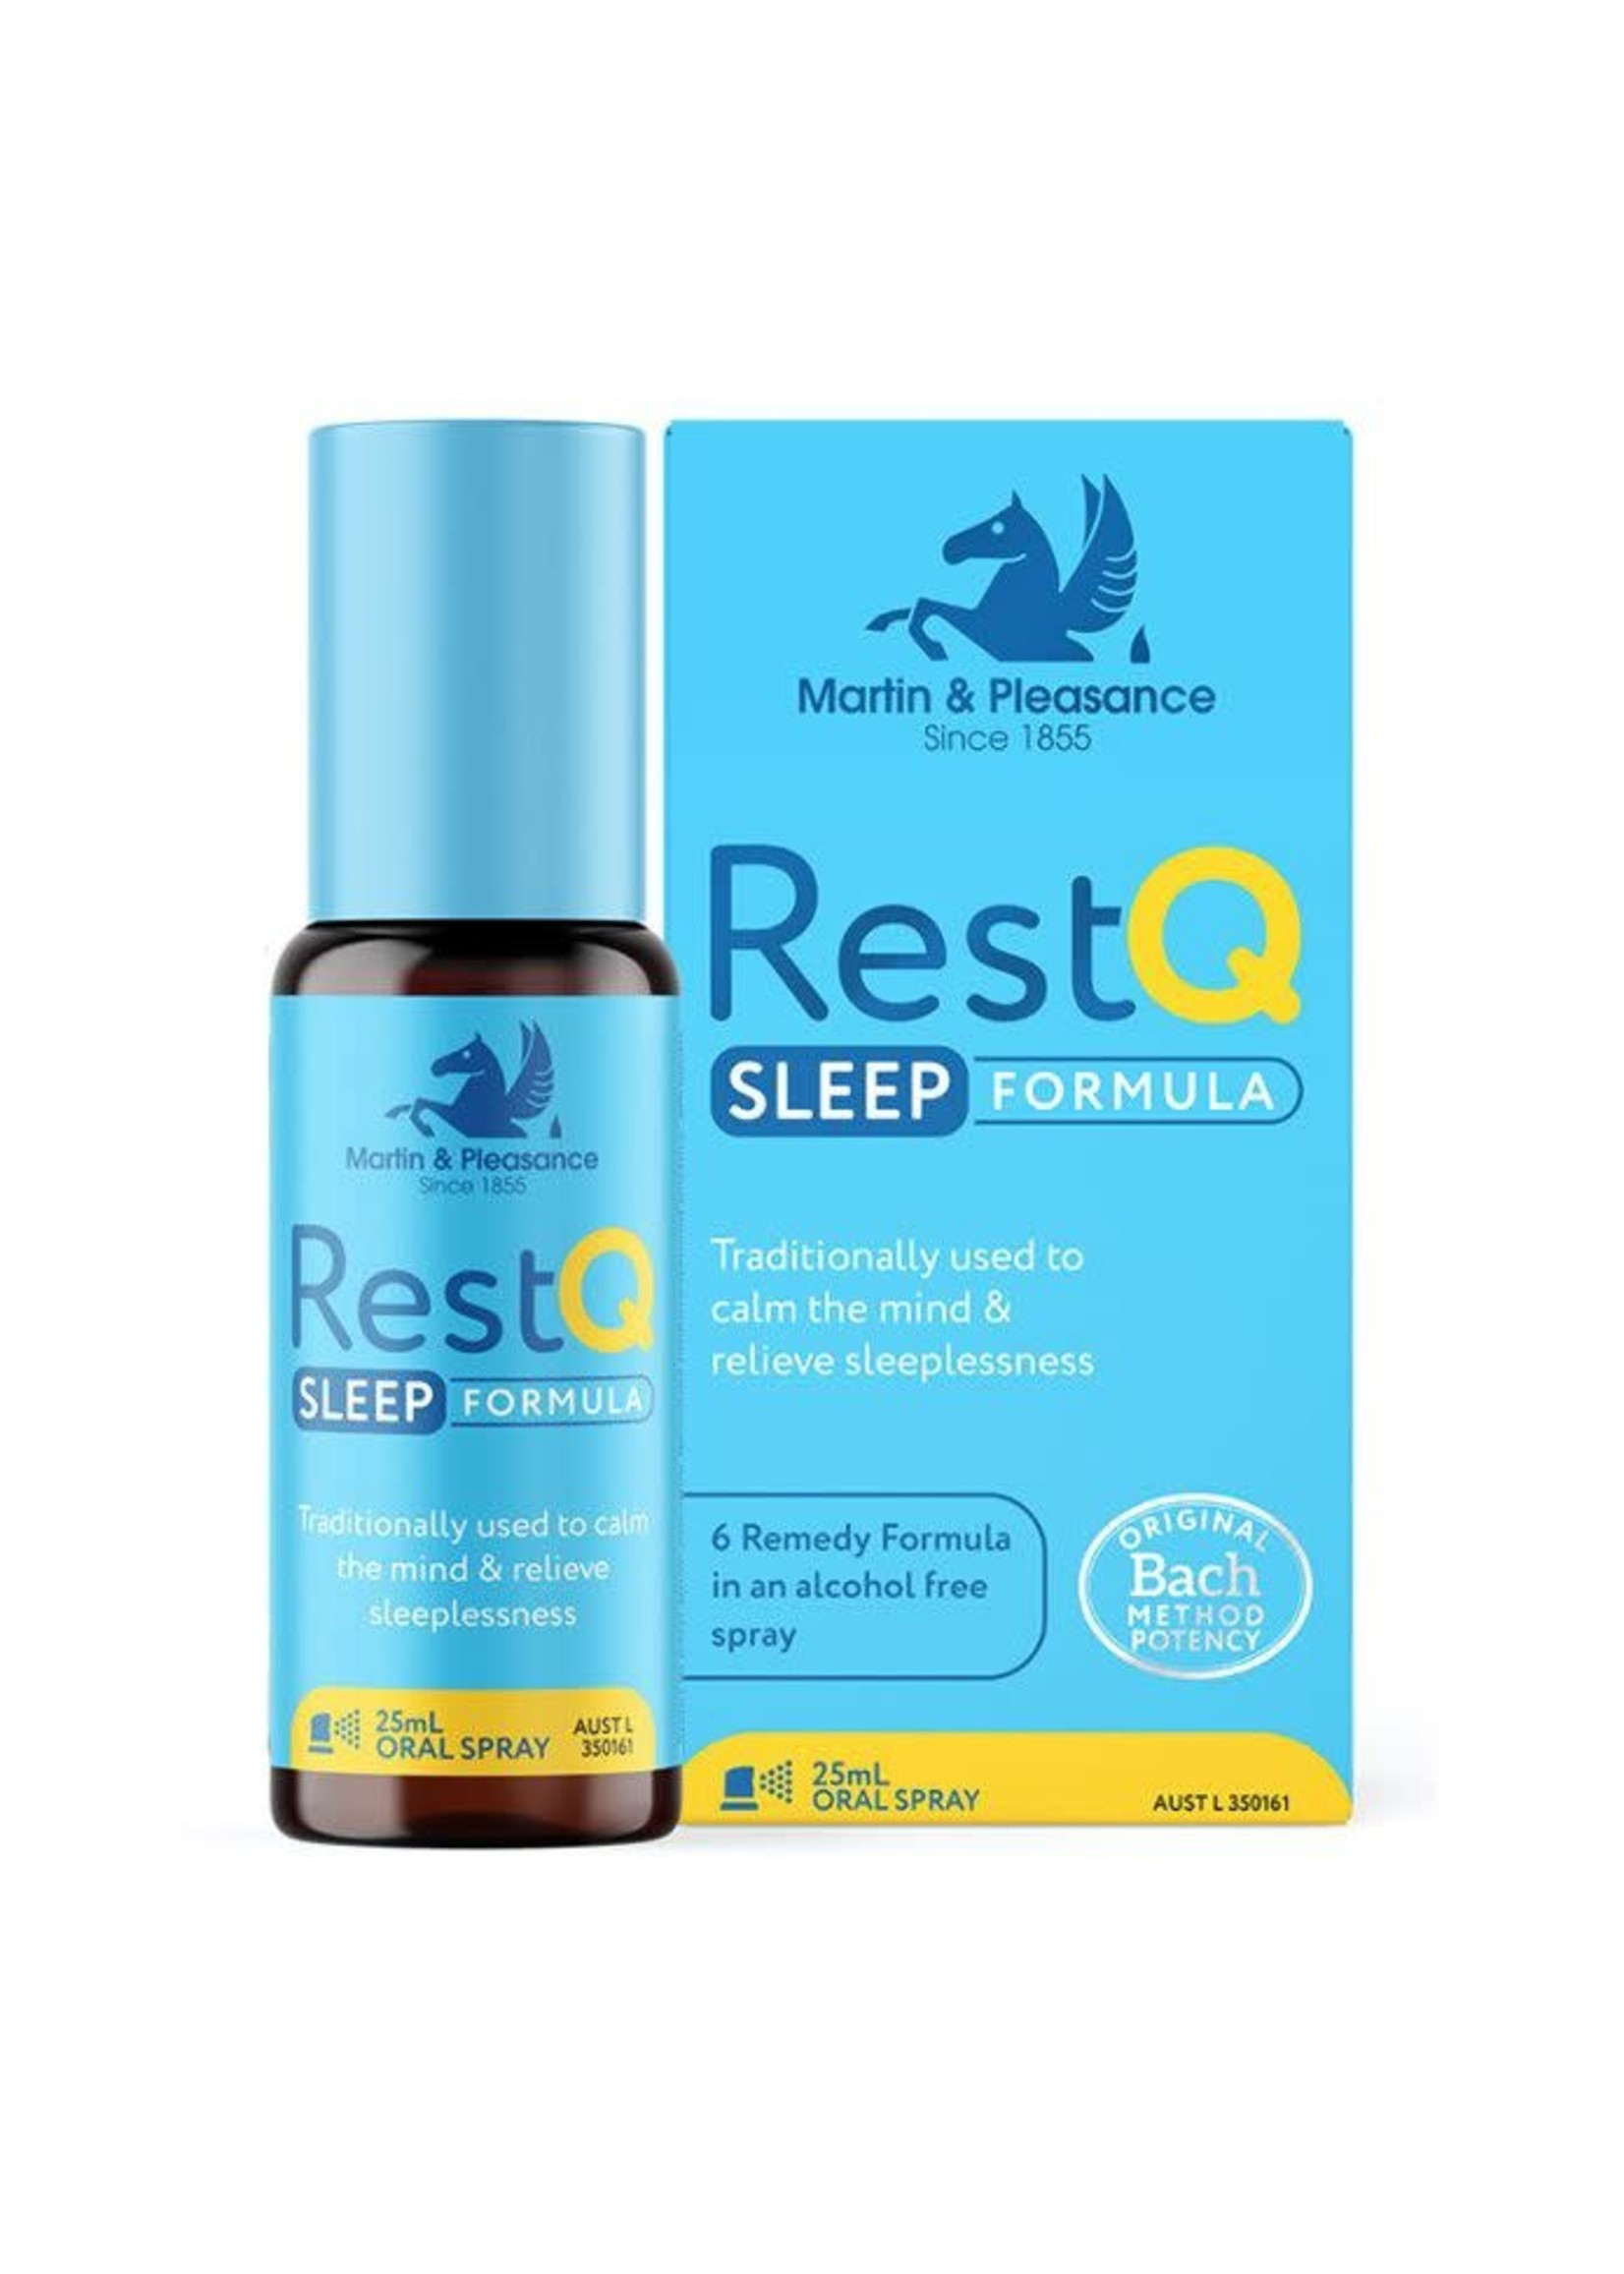 RestQ Martin & Pleasance Rest Q Sleep Formula 25ml